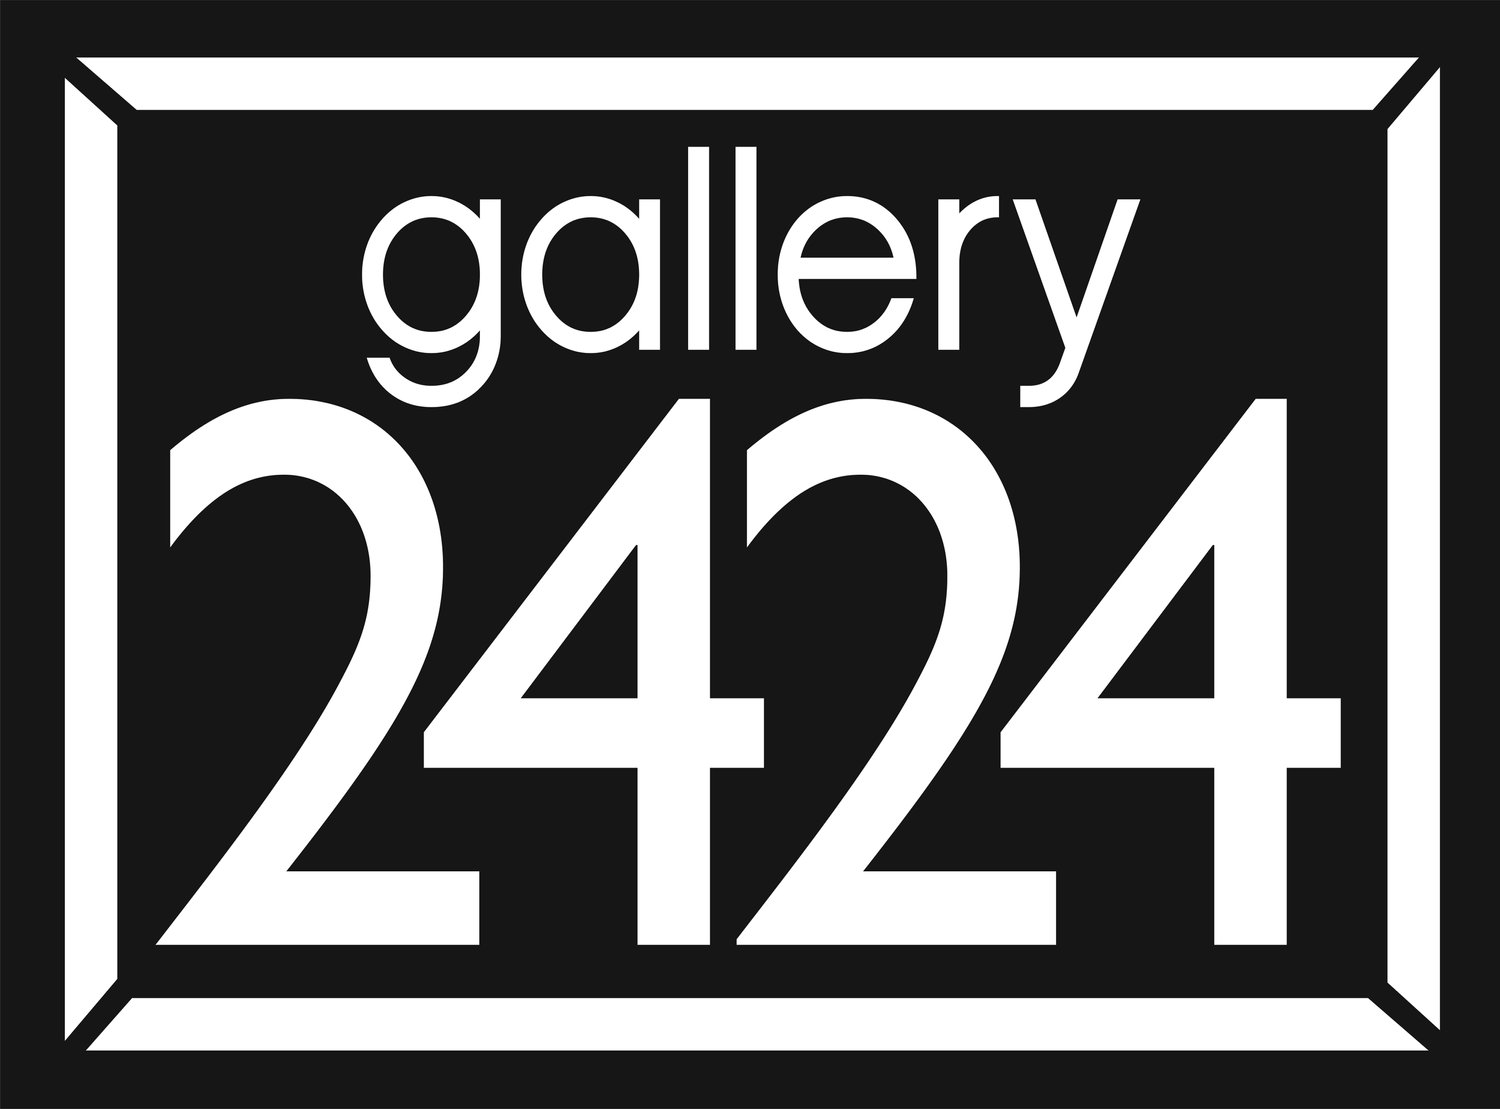 Gallery 2424